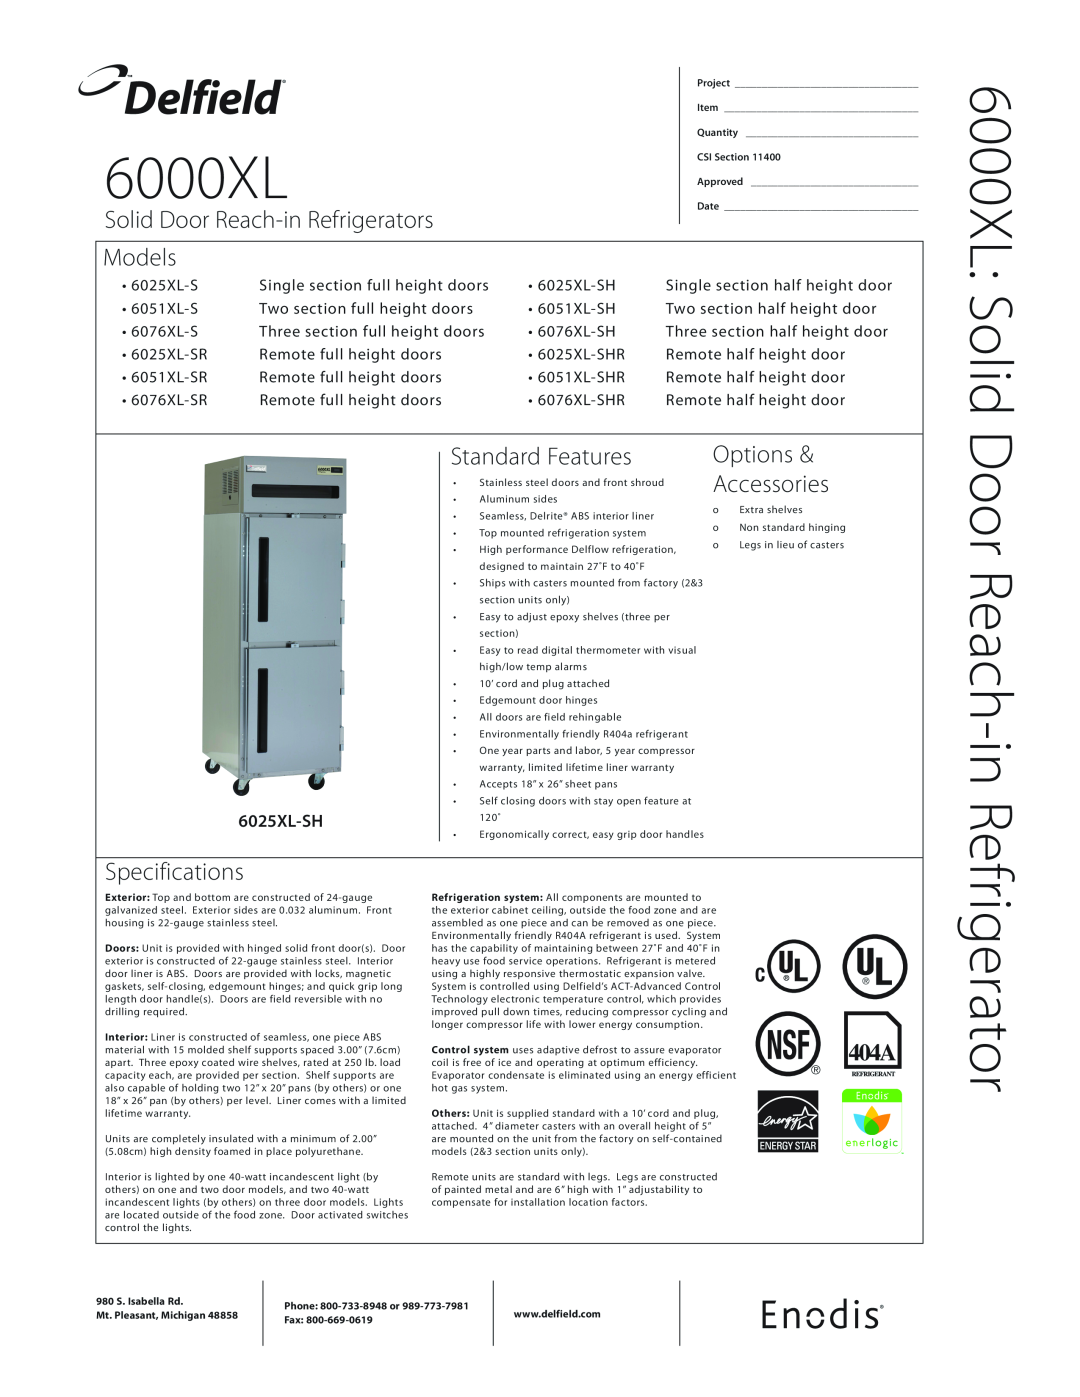 Delfield specifications 6000XL Solid, Delfield, Solid Door Reach-in Refrigerators, Models, Specifications 